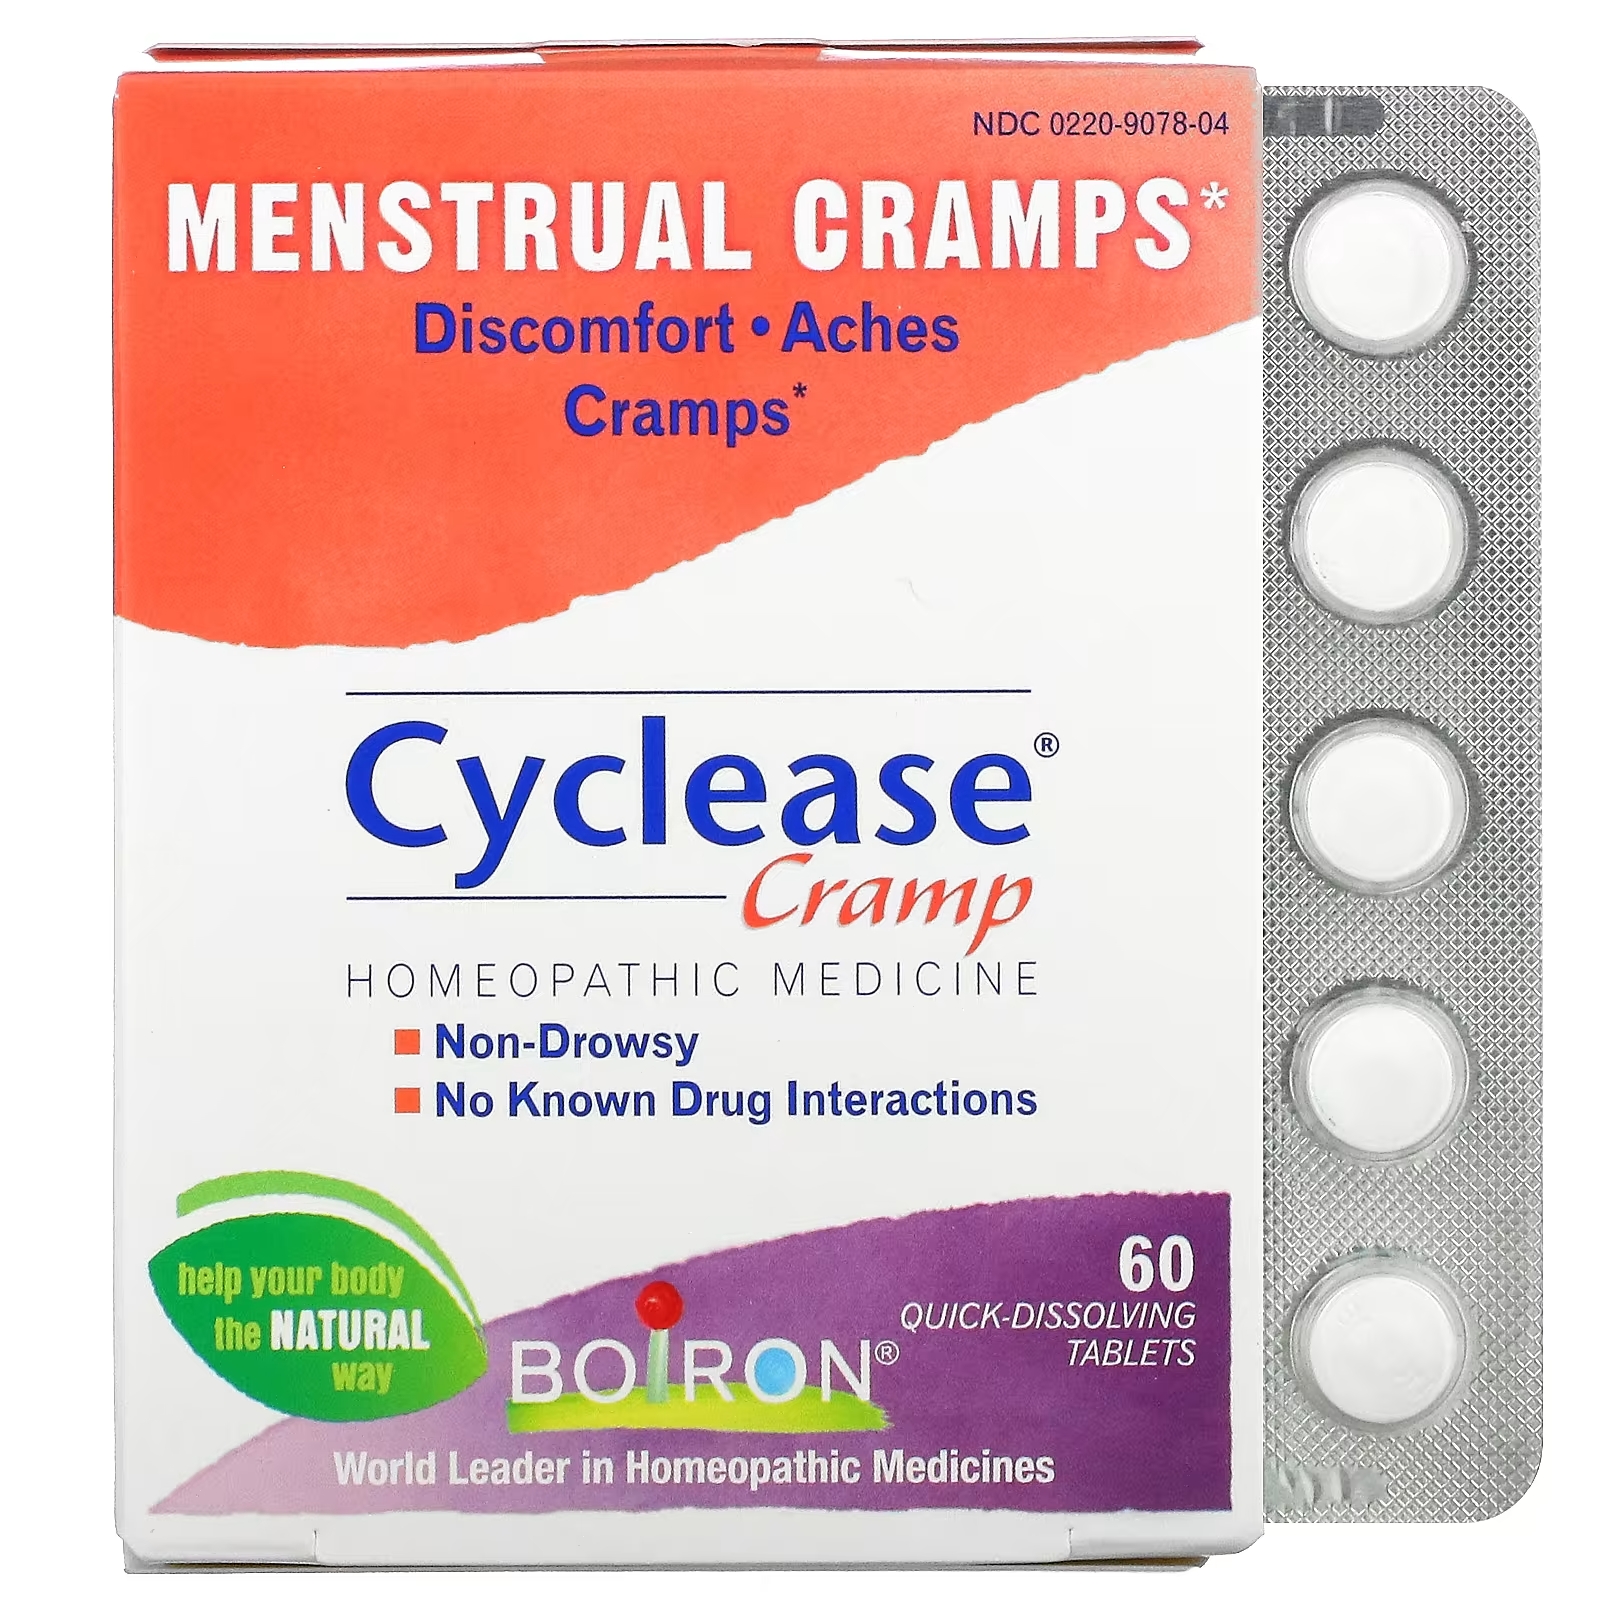 Boiron Cyclease Cramp менструальные спазмы, 60 быстрорастворимых таблеток boiron arnicare обезболивание 60 быстрорастворимых таблеток